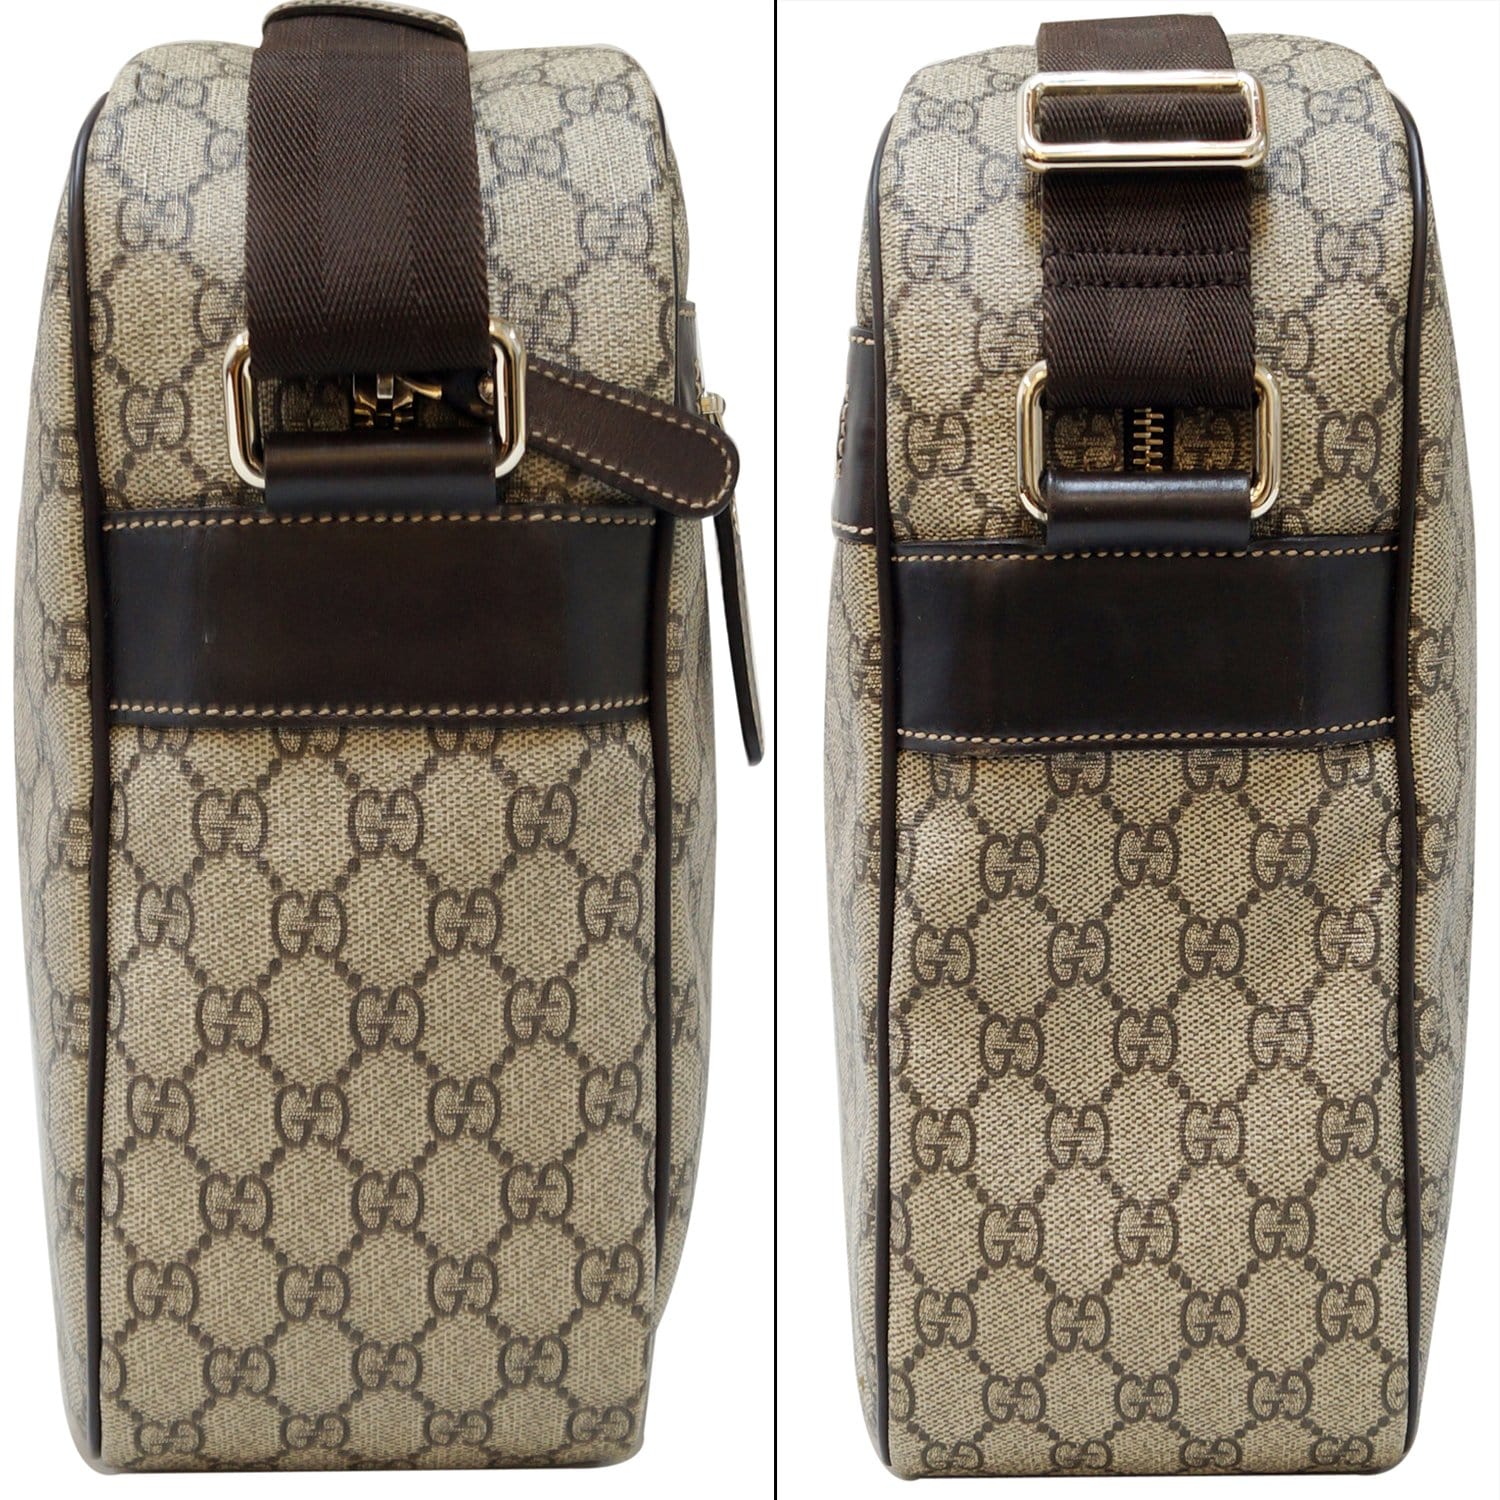 Gucci - Men’s Multi-function Bag with Interlocking G - (Beige/Ebony)